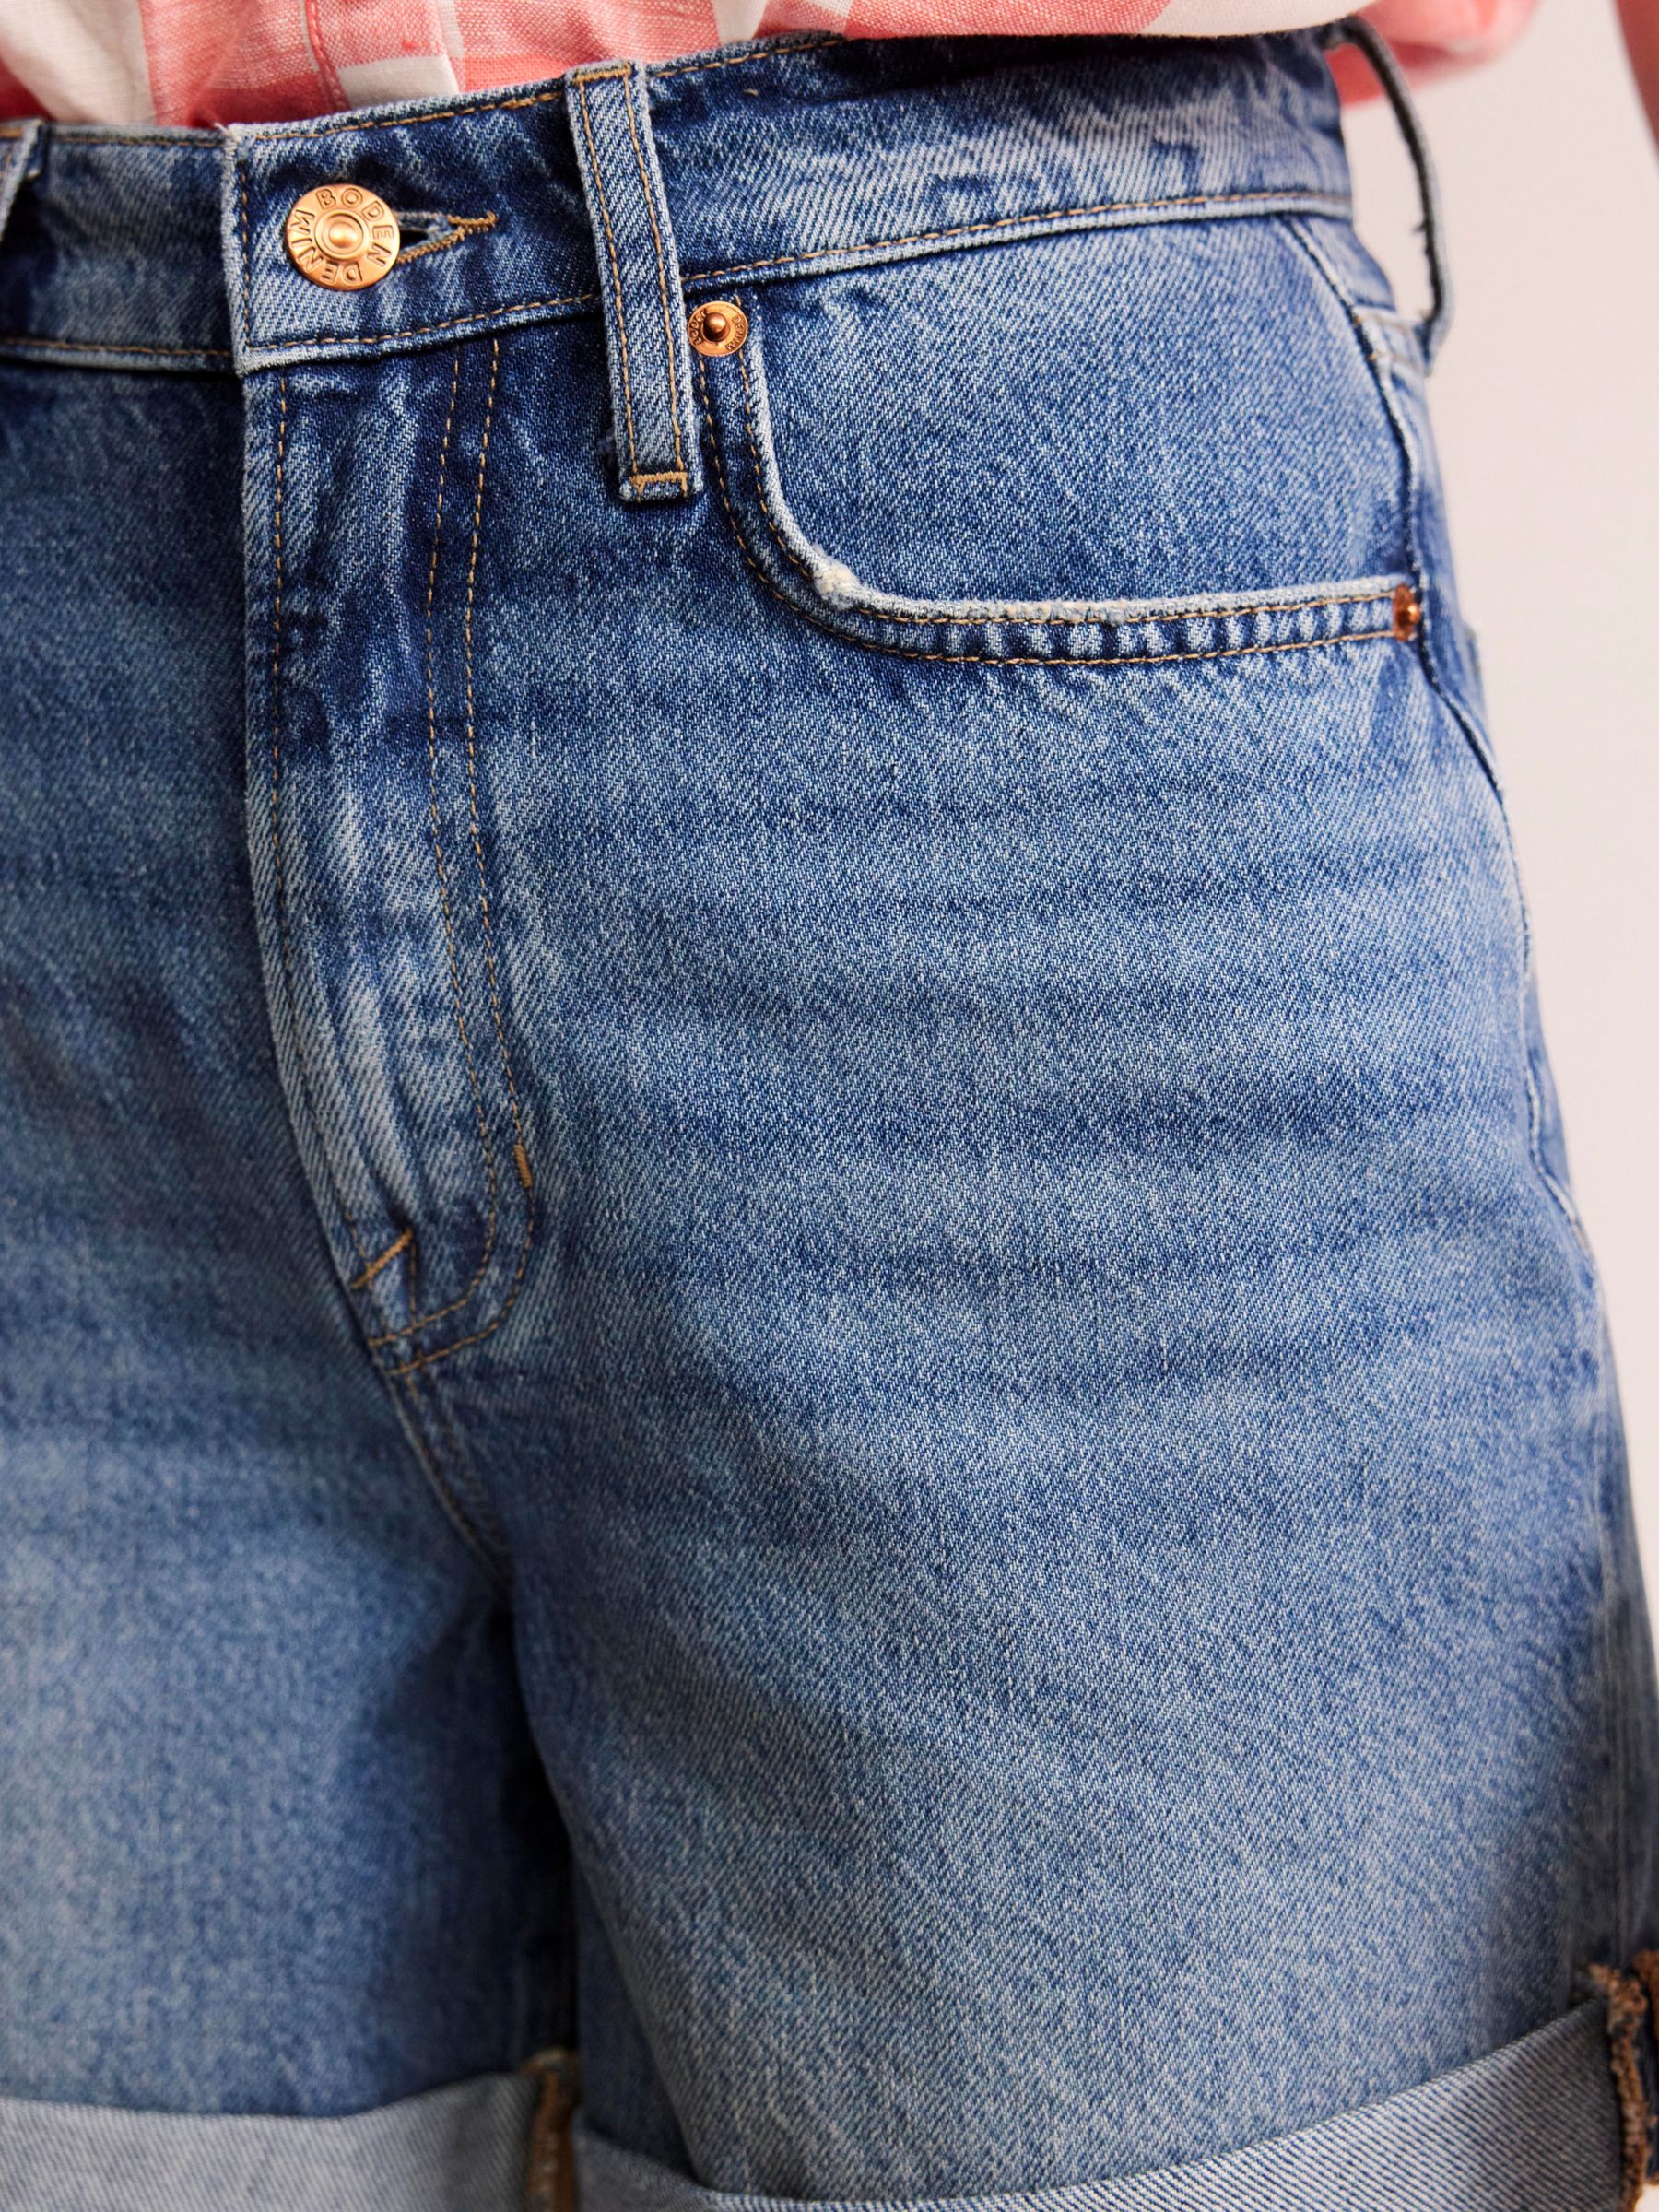 Boden Denim Shorts, Mid Vintage, 8